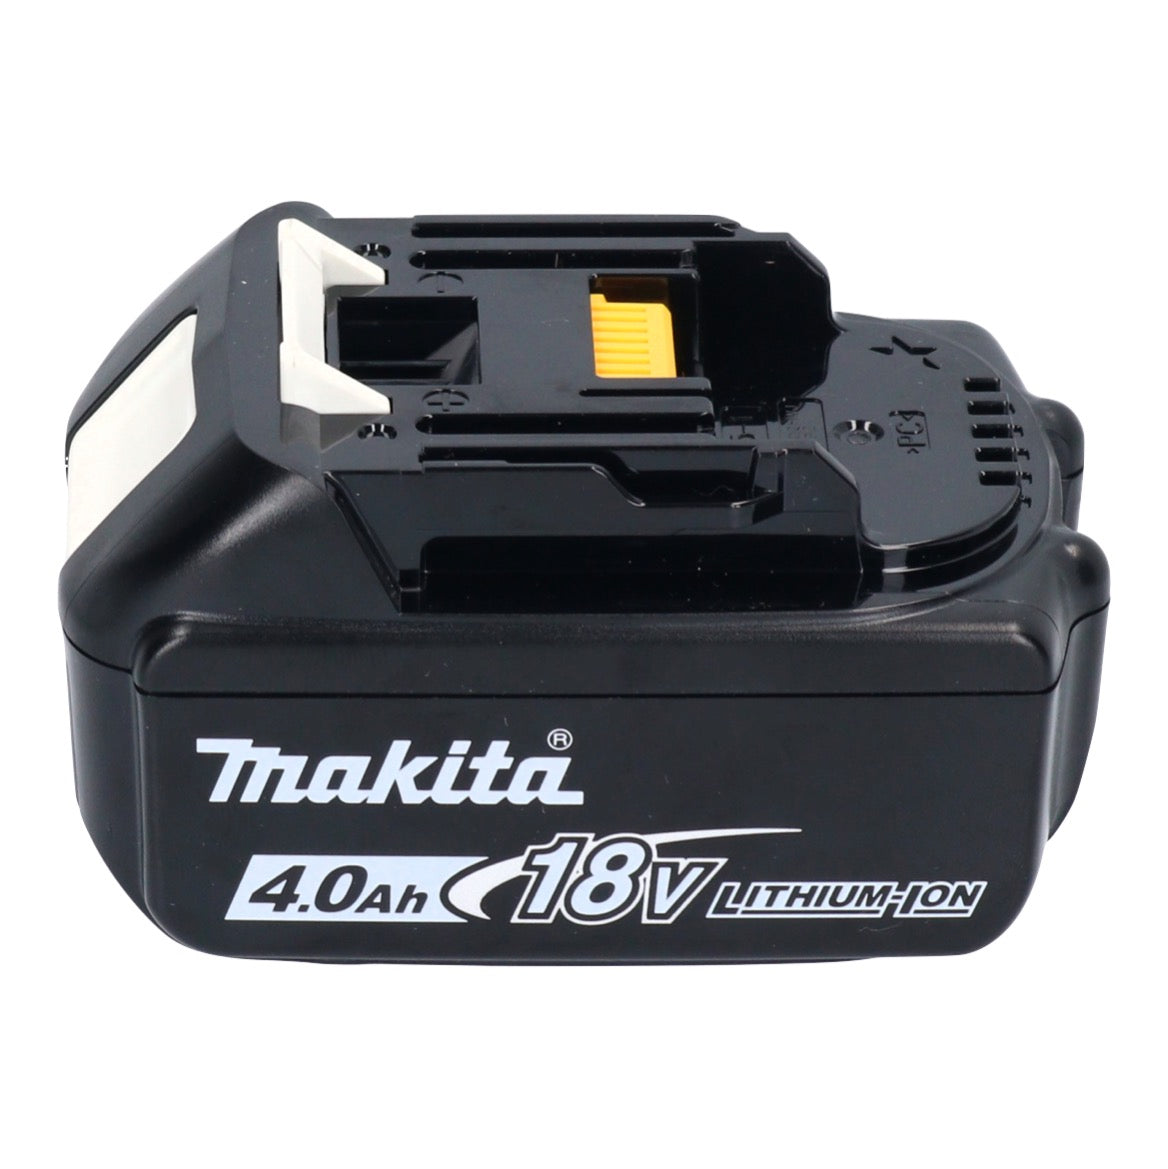 Makita DHP 489 M1 Akku Schlagbohrschrauber 18 V 73 Nm Brushless + 1x Akku 4,0 Ah - ohne Ladegerät